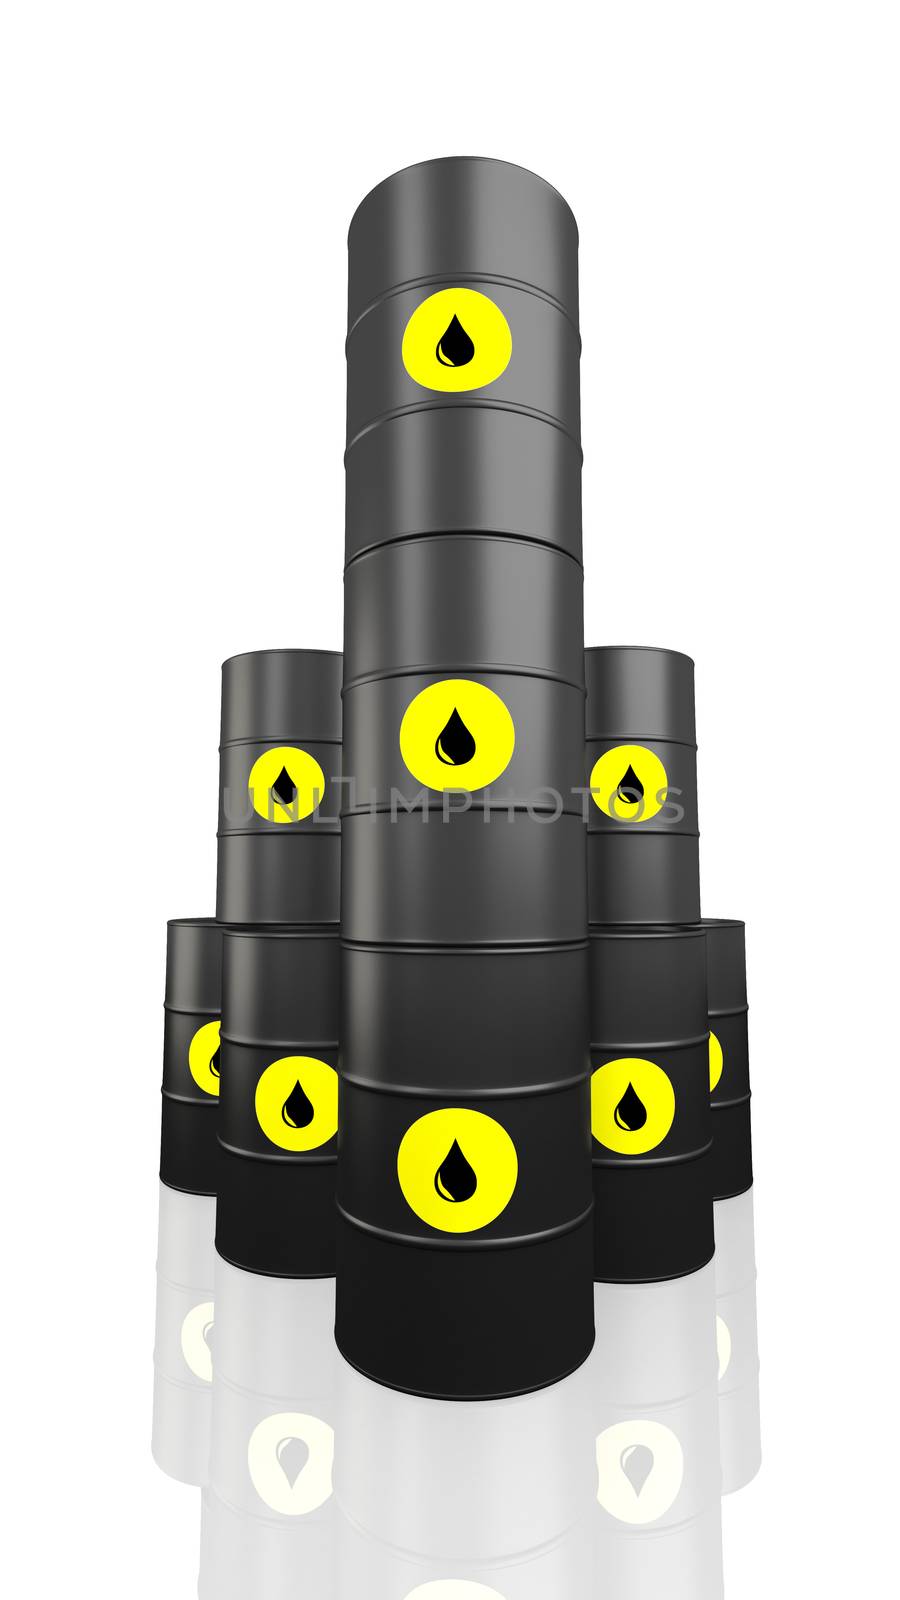 3D illustration of black oil barrel isolated on white background.